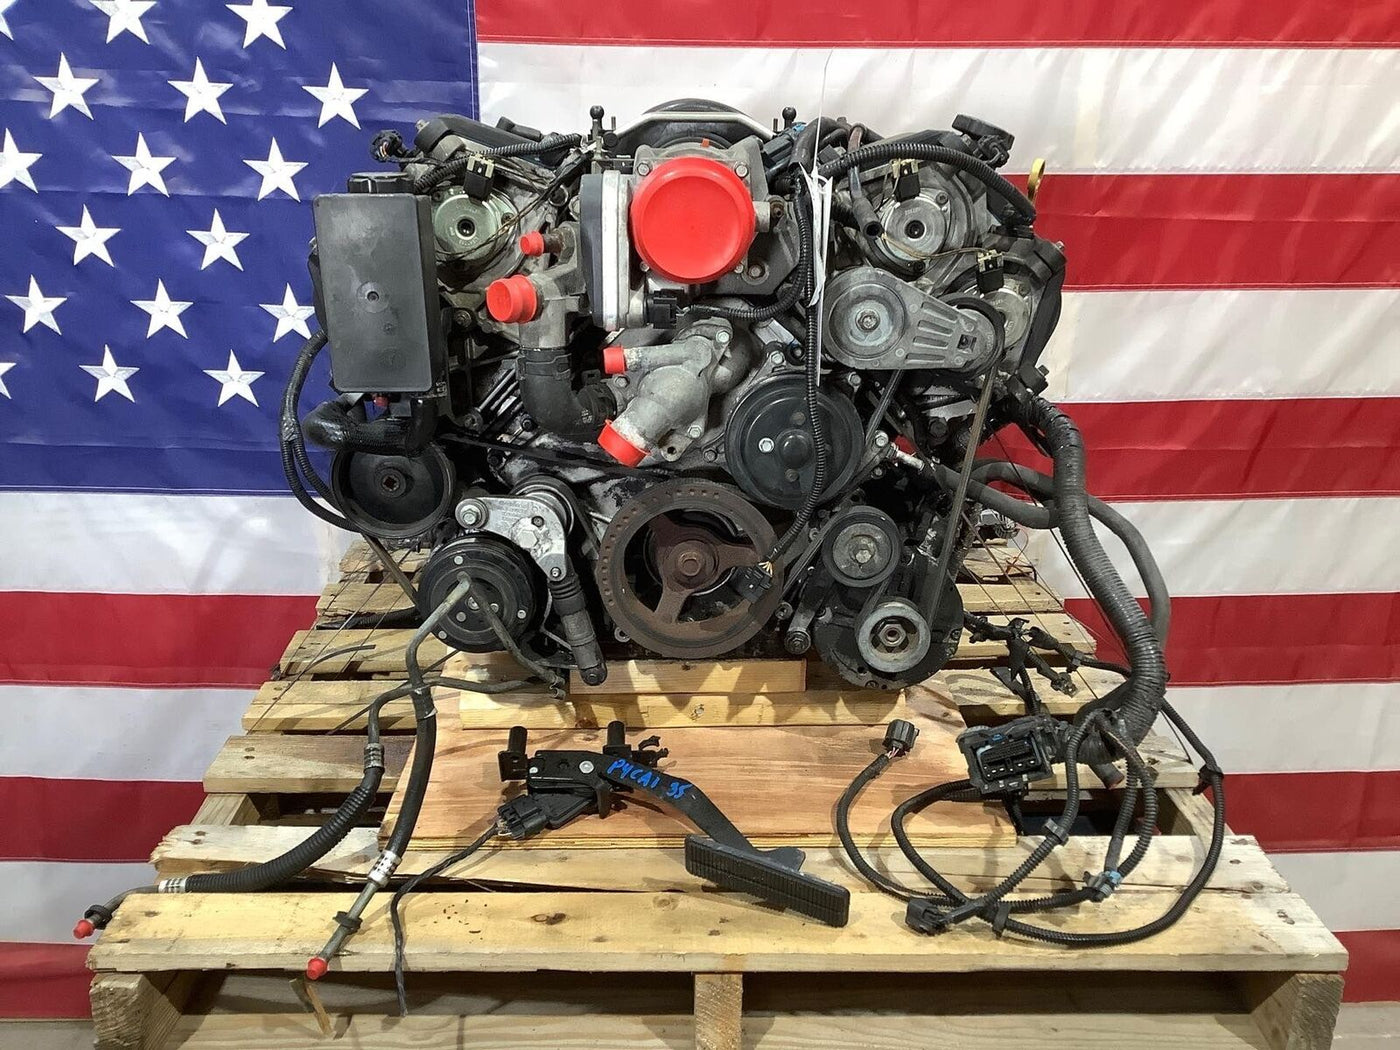 04-06 Cadillac XLR 4.6L Northstar V8 Engine Dropout Donor Swap (102k) Tested